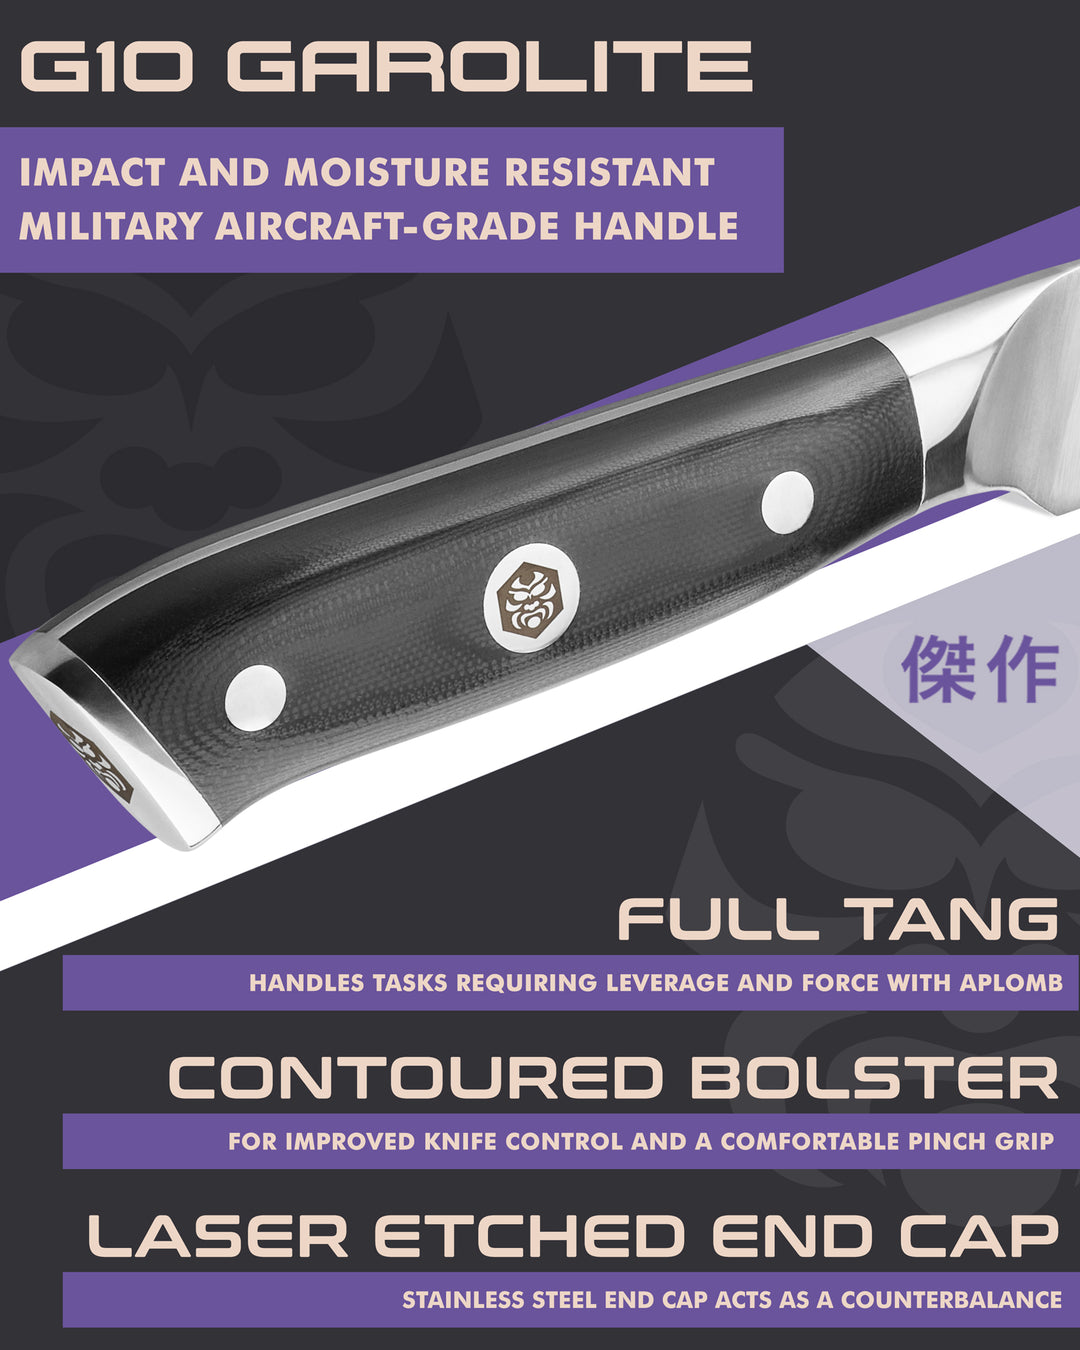 Kessaku Dynasty Nakiri Knife handle features: G10 handle, full tang, contoured bolster, laser etched end cap